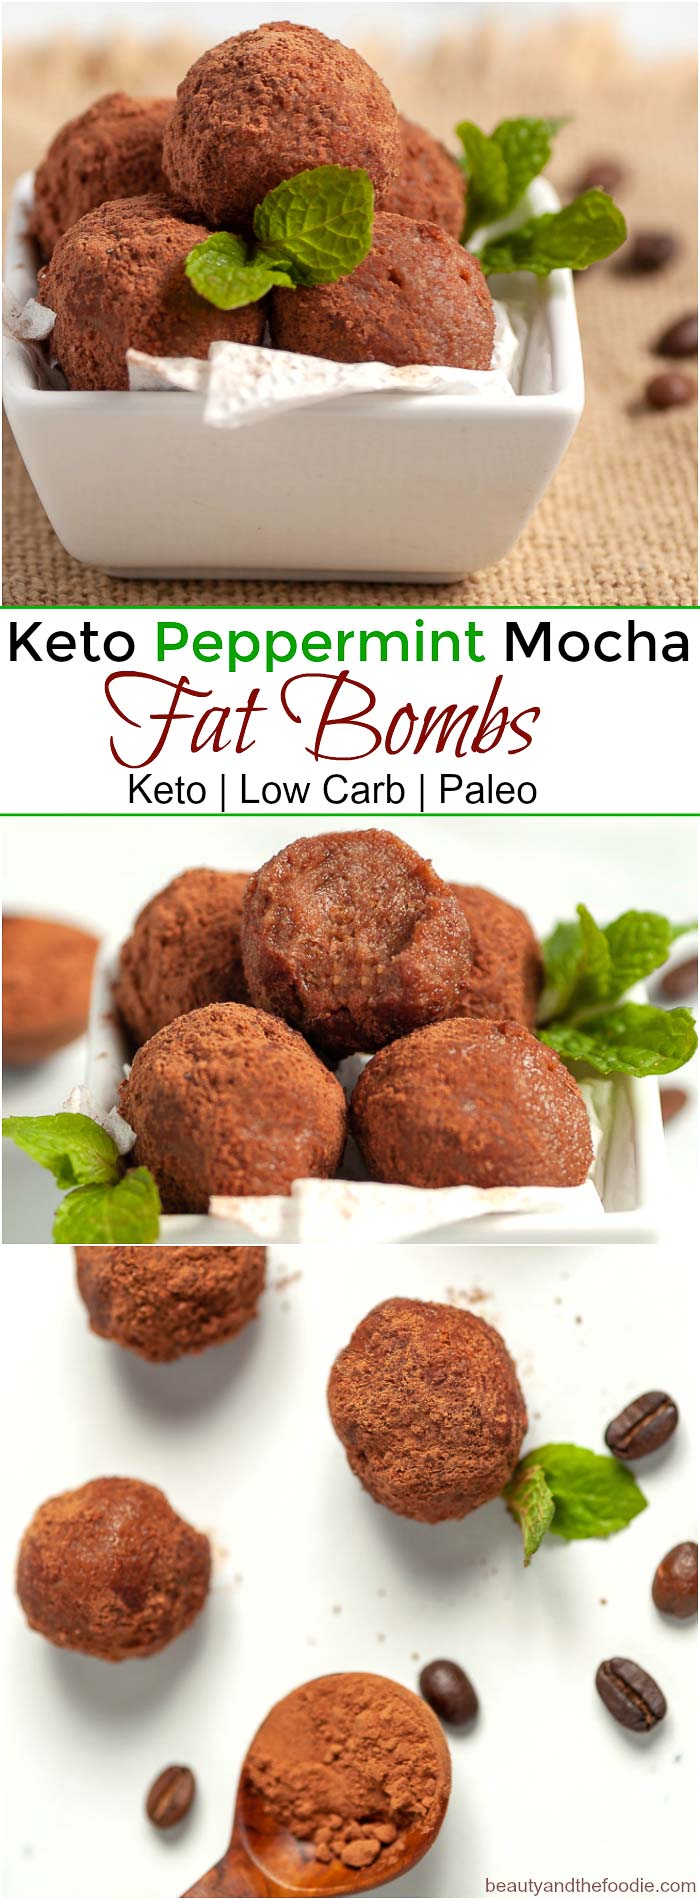 Keto Peppermint Mocha Fat Bombs- Paleo, Keto & Low carb with #powercreamer